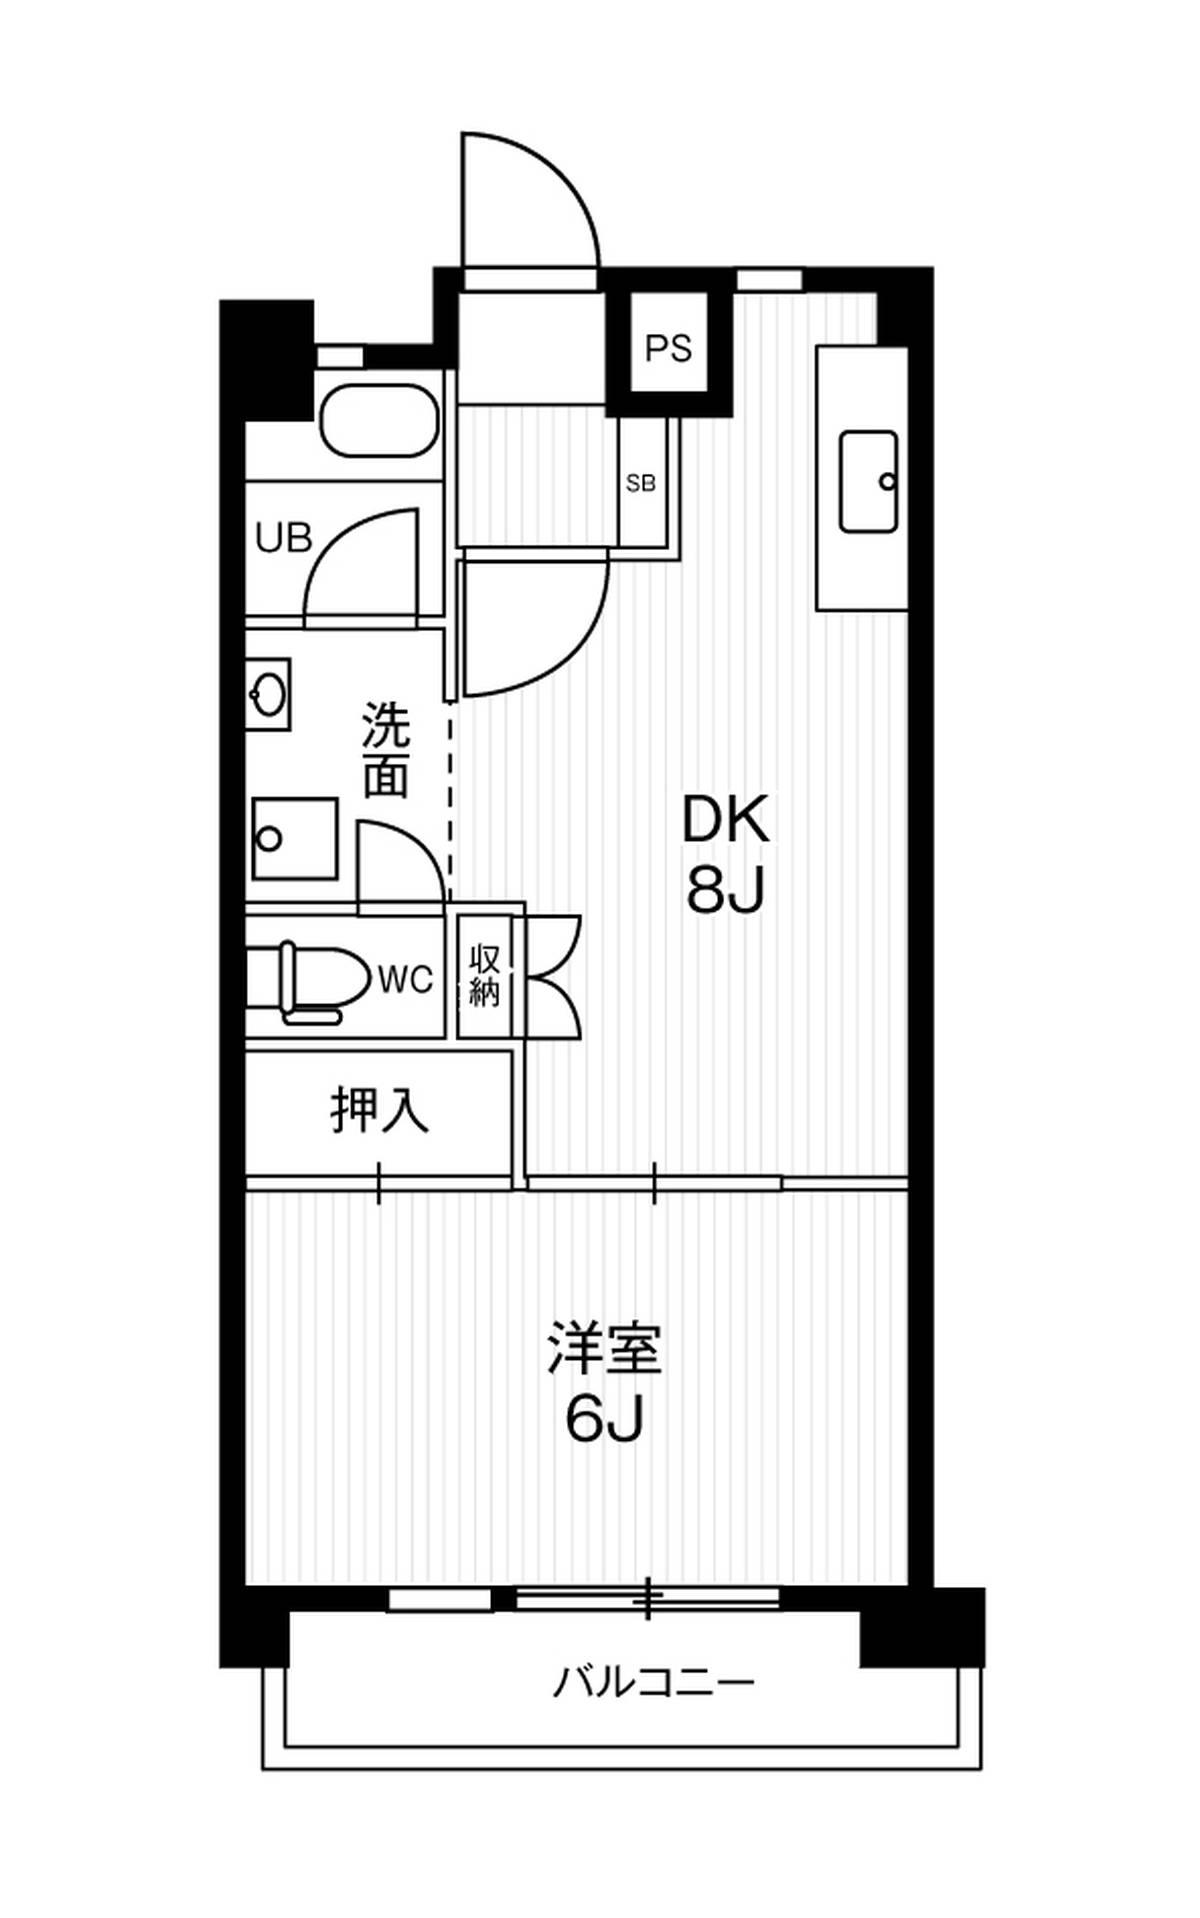 1DK floorplan of Village House Naka in Kakamigahara-shi